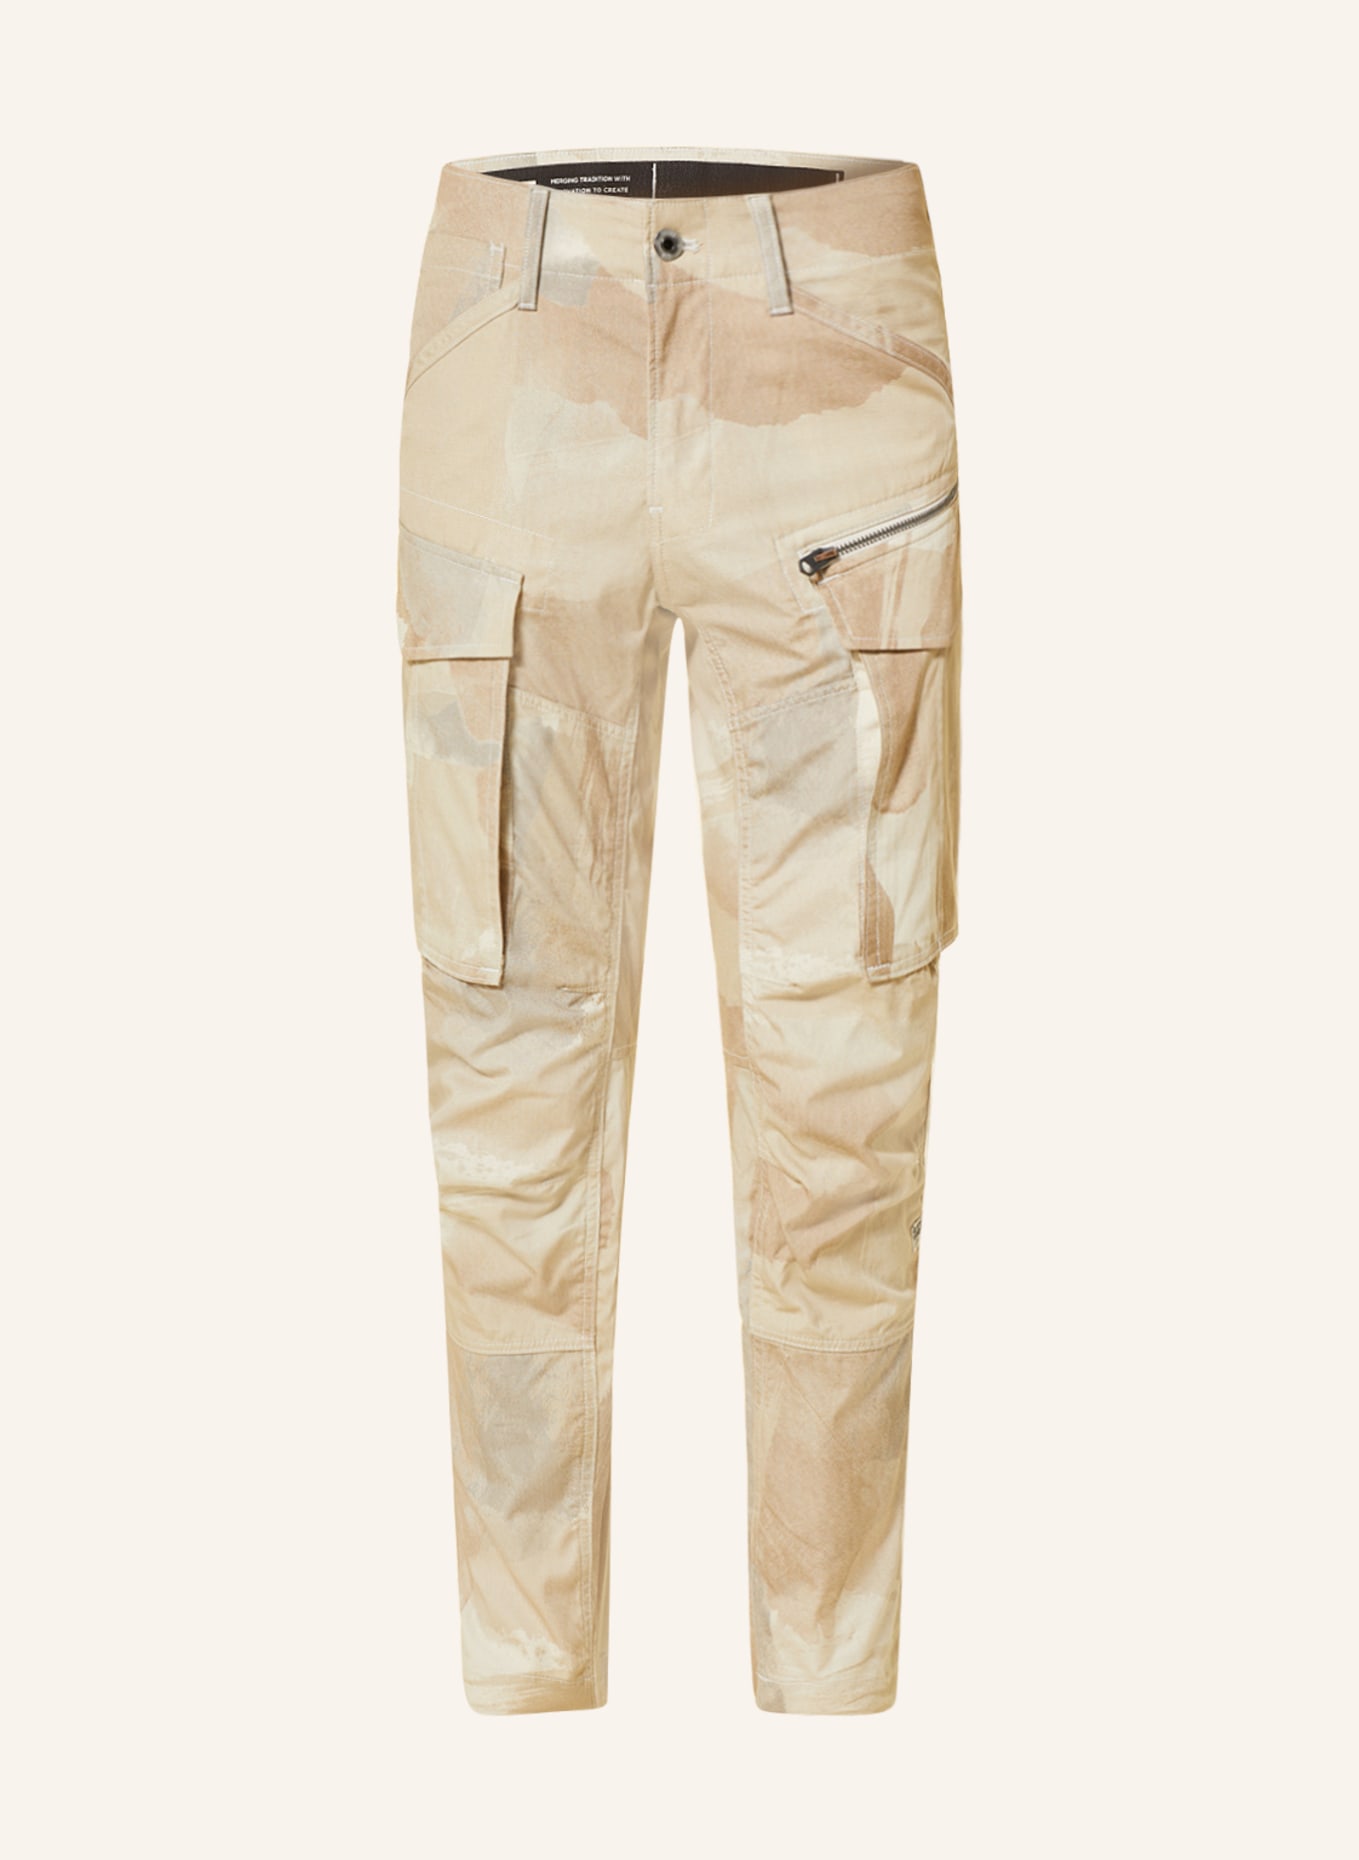 G-Star RAW Cargo pants tapered fit in beige/ ecru